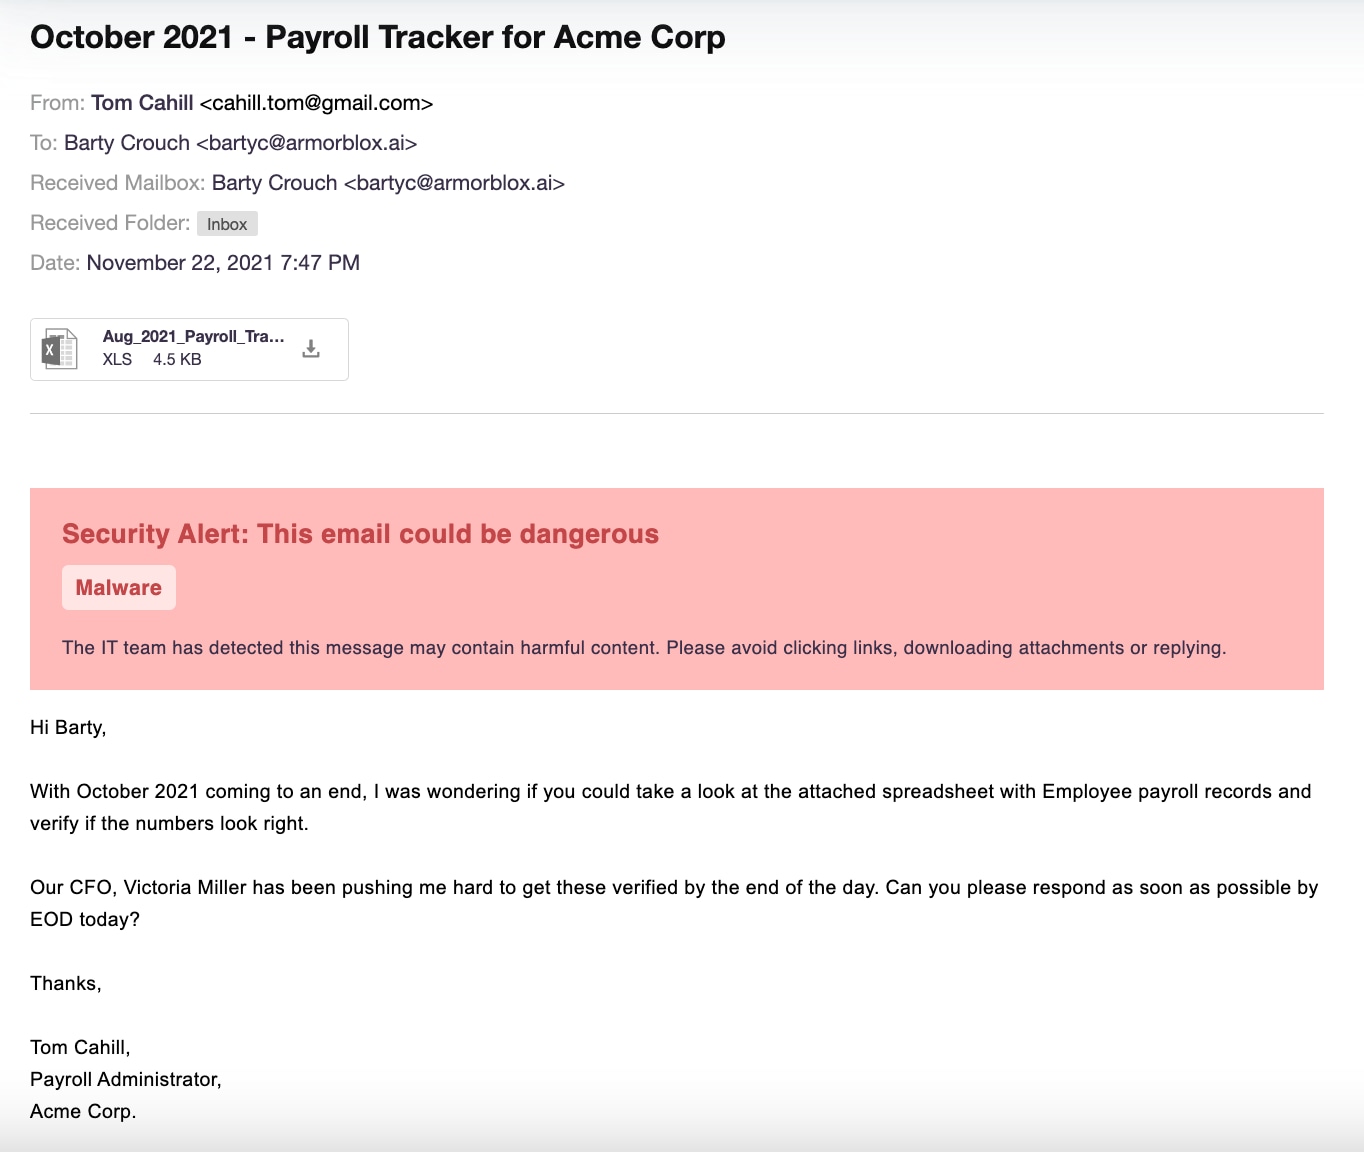 Sample screen capture of phishing payroll message